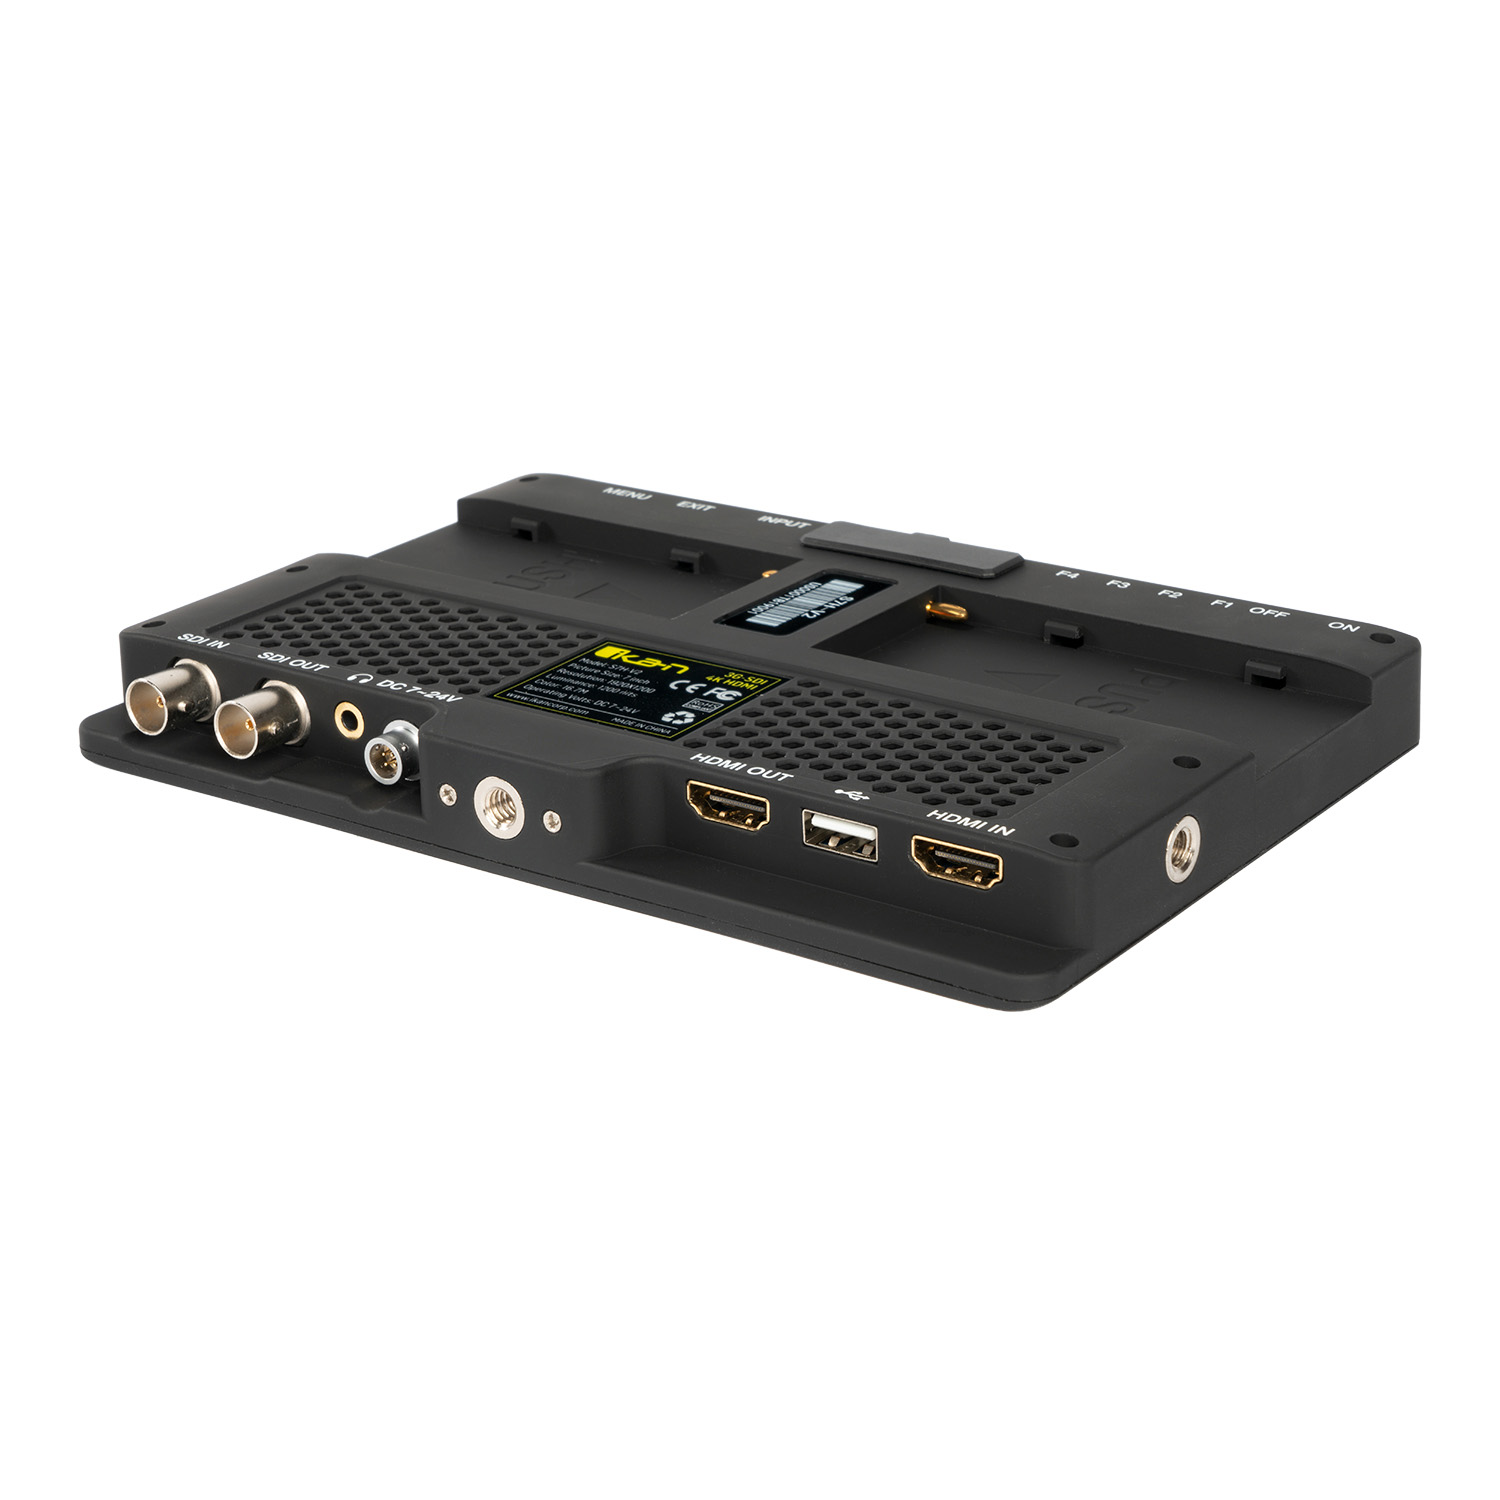 S7H-V2 Ikan Saga 7-Inch High Bright 4K HDMI/3G-SDI On-Camera Field Monitor with 3D LUTs Support 